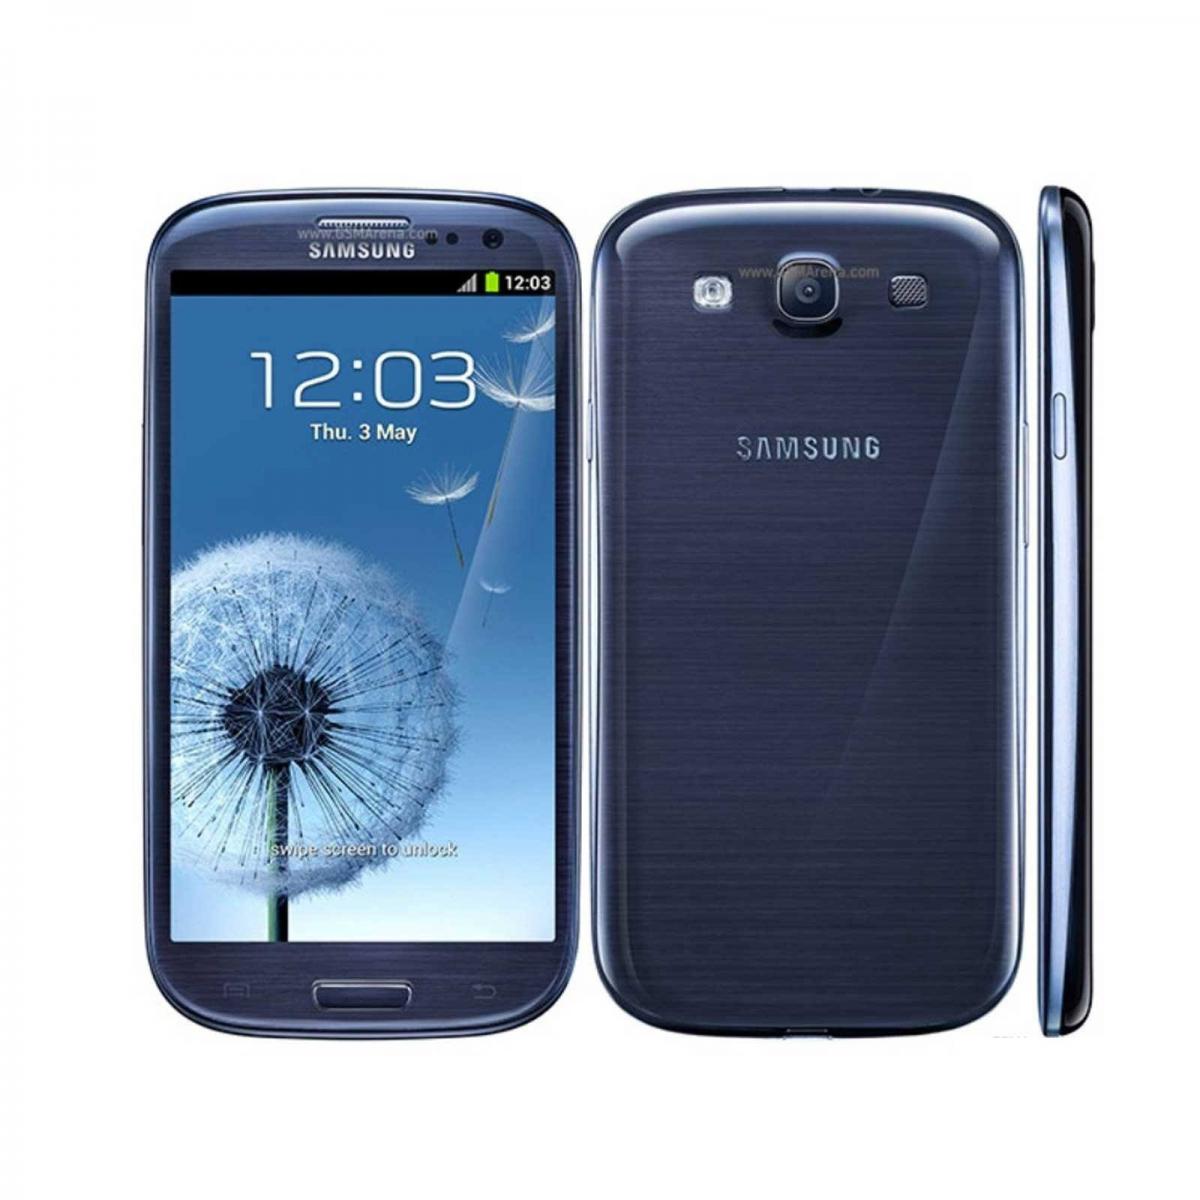 Samsung - Samsung Galaxy S3 Neo 16 Go Bleu - débloqué tout opérateur - Smartphone Android